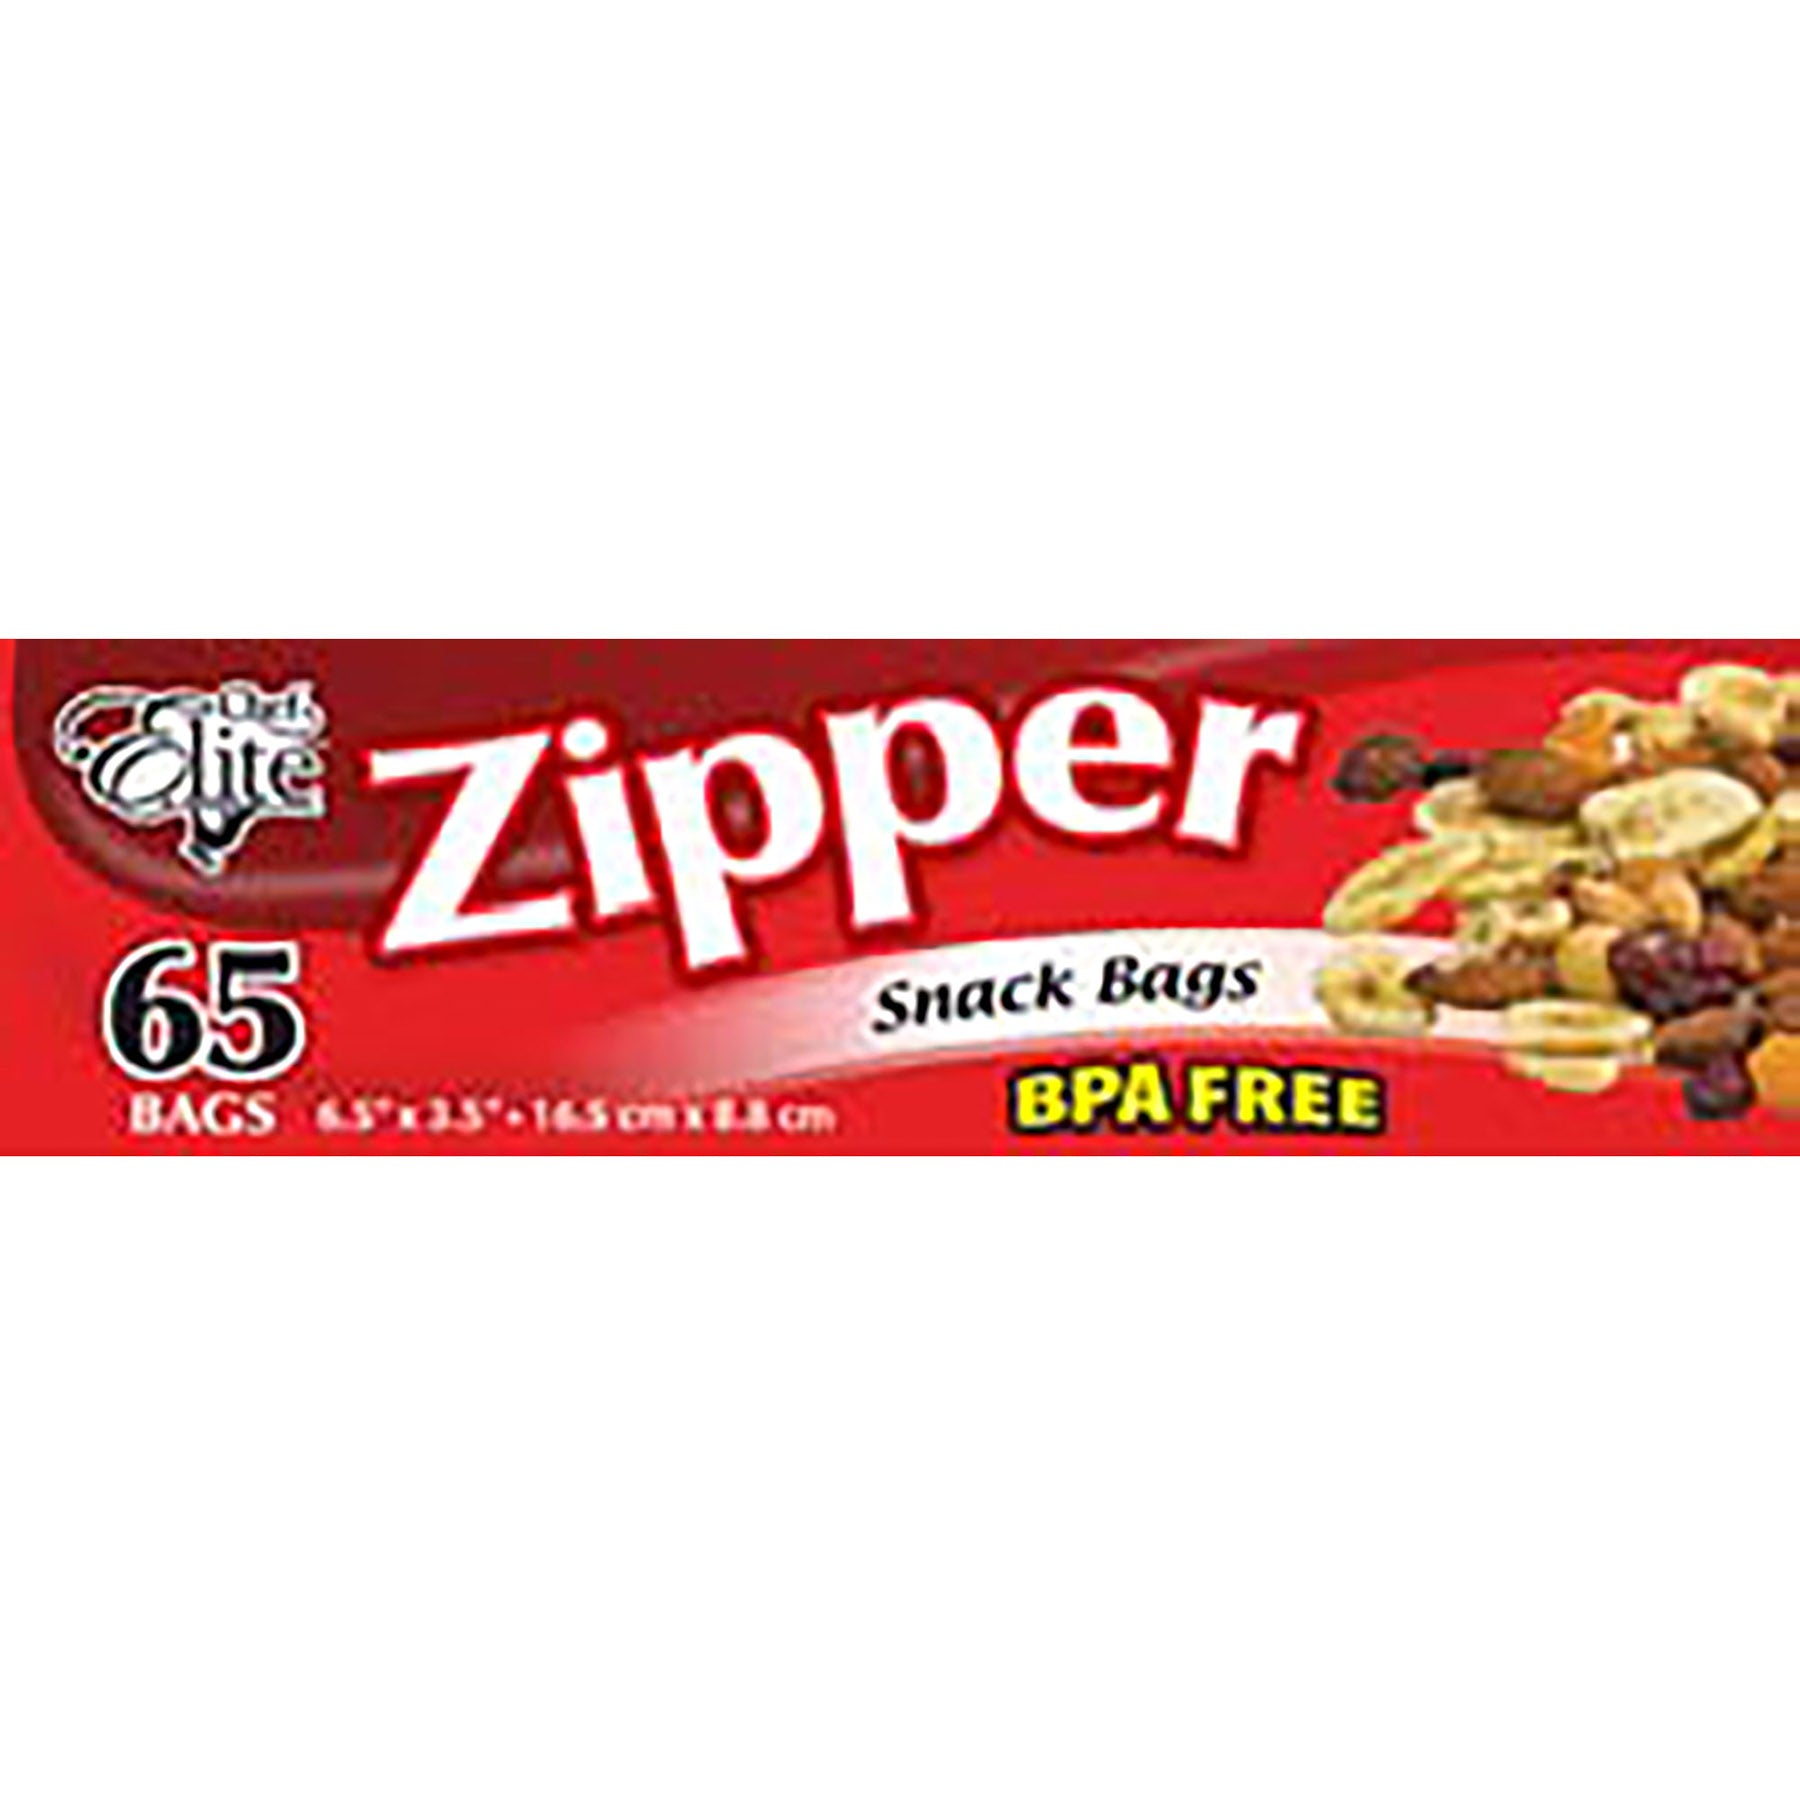 Chef Elite 65 Zipper Snack Bags 6.5x3.5in